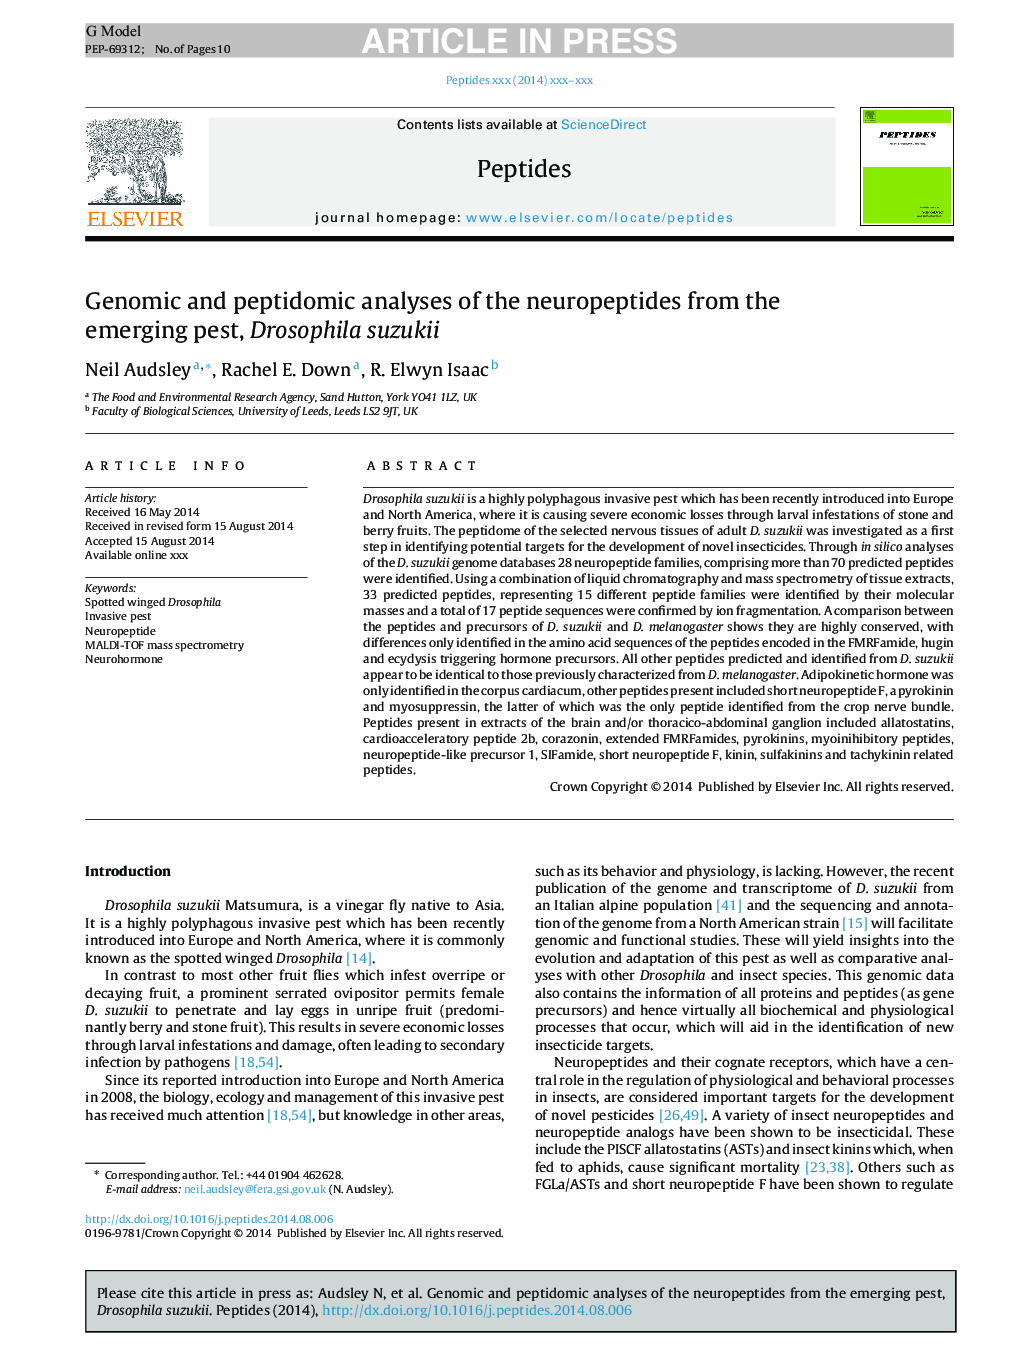 Genomic and peptidomic analyses of the neuropeptides from the emerging pest, Drosophila suzukii